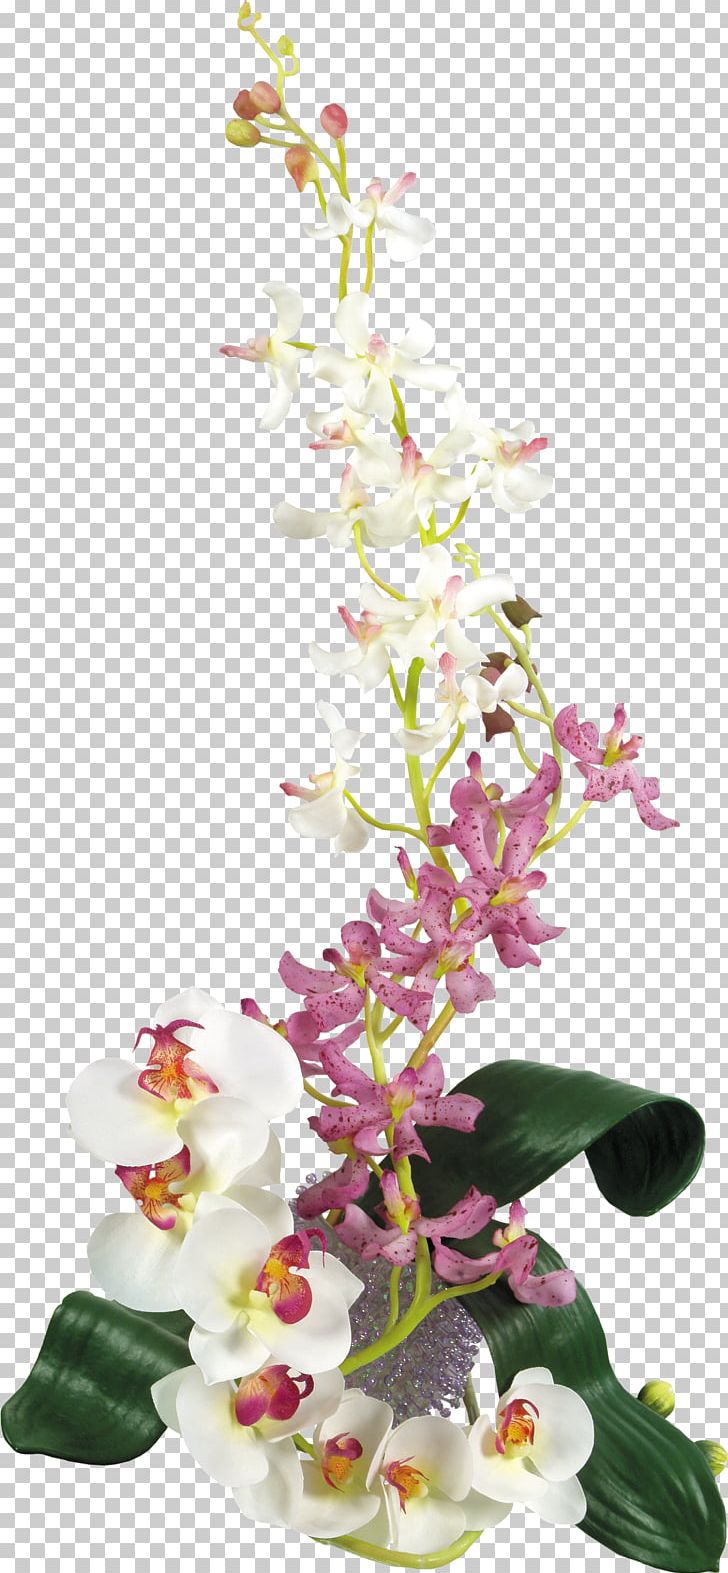 Flower Bouquet Cut Flowers Orchids Computer Icons PNG, Clipart, Artificial Flower, Branch, Computer Icons, Cut Flowers, Floral Design Free PNG Download